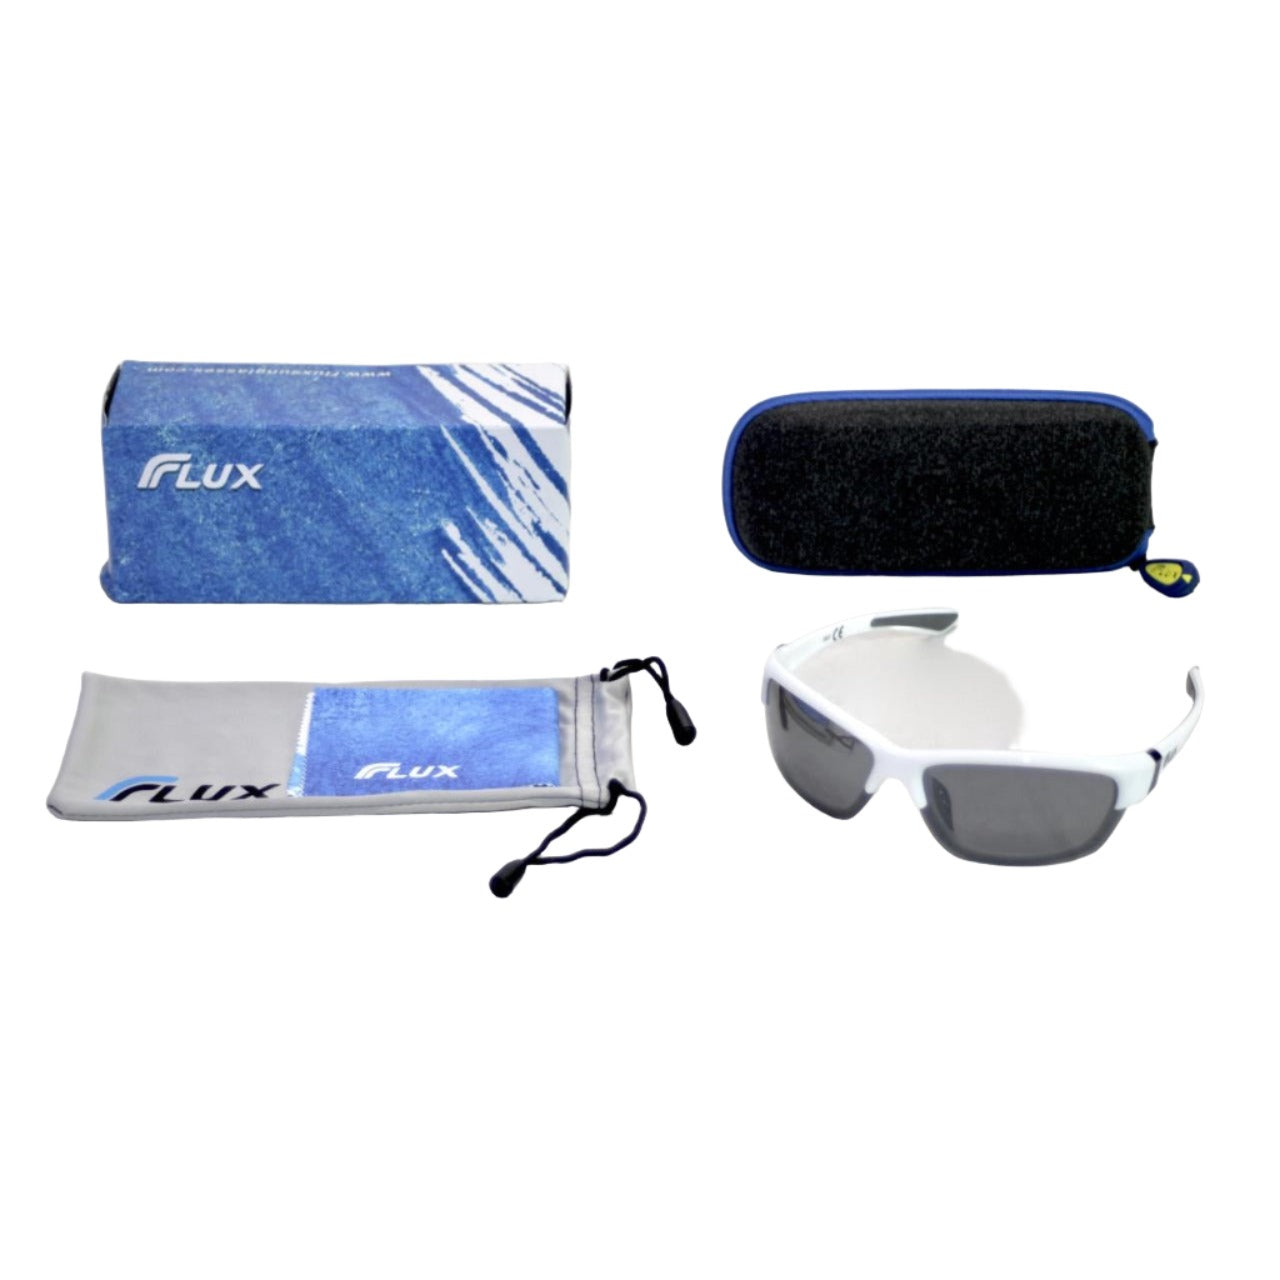 Flux AVENTO Polarized Sunglasses for Men and Women